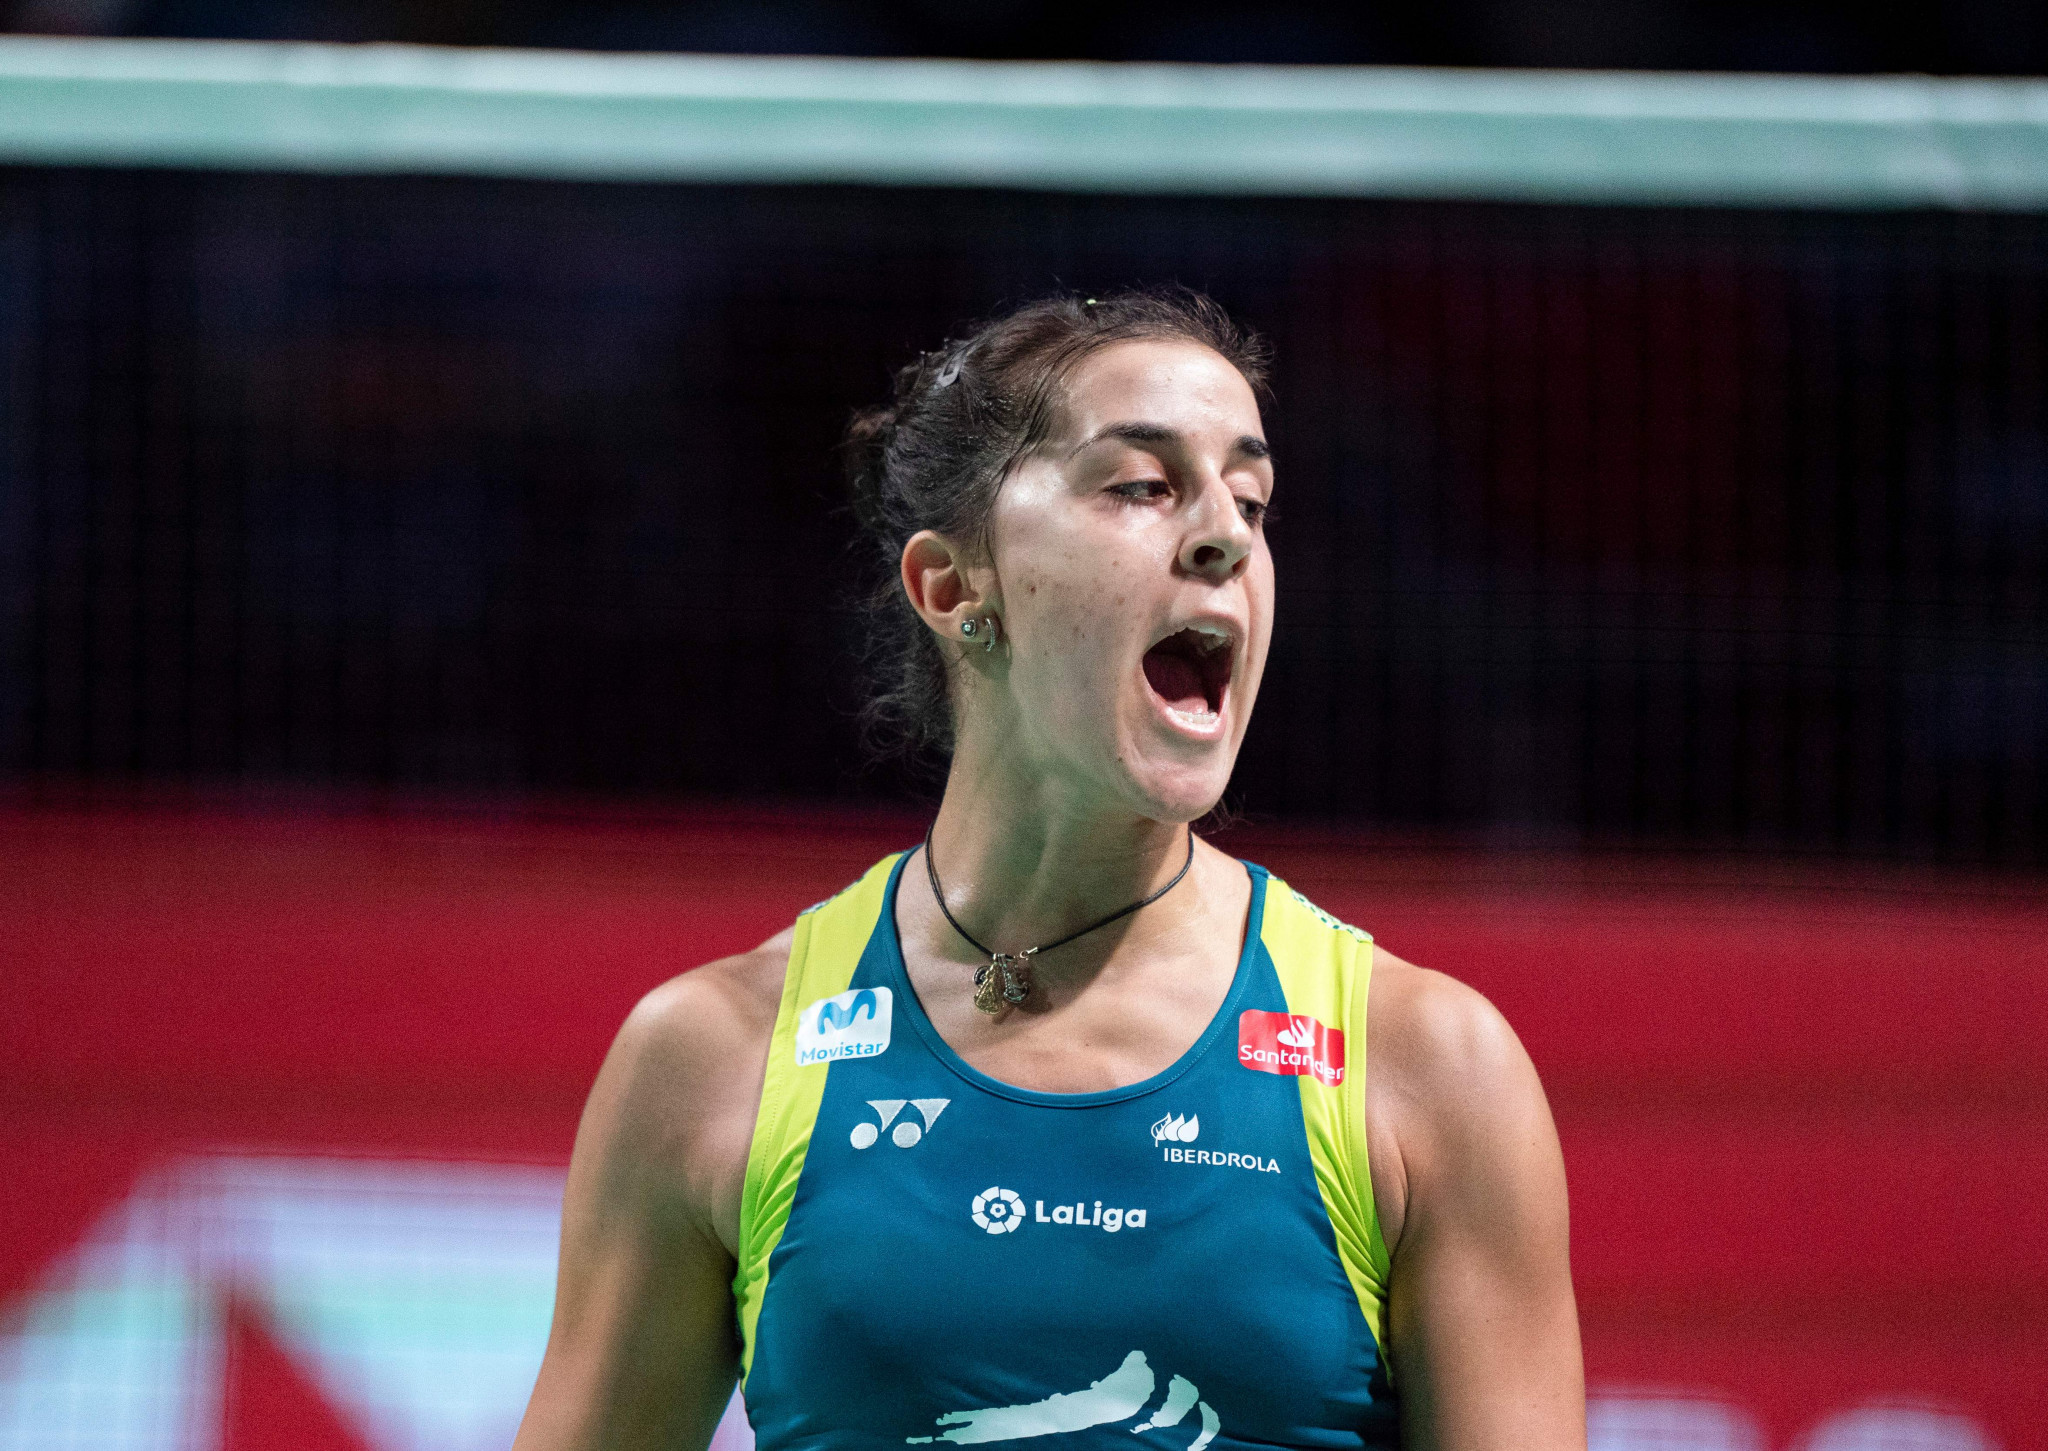 Marín advances to European Badminton Championships semi-finals in Madrid